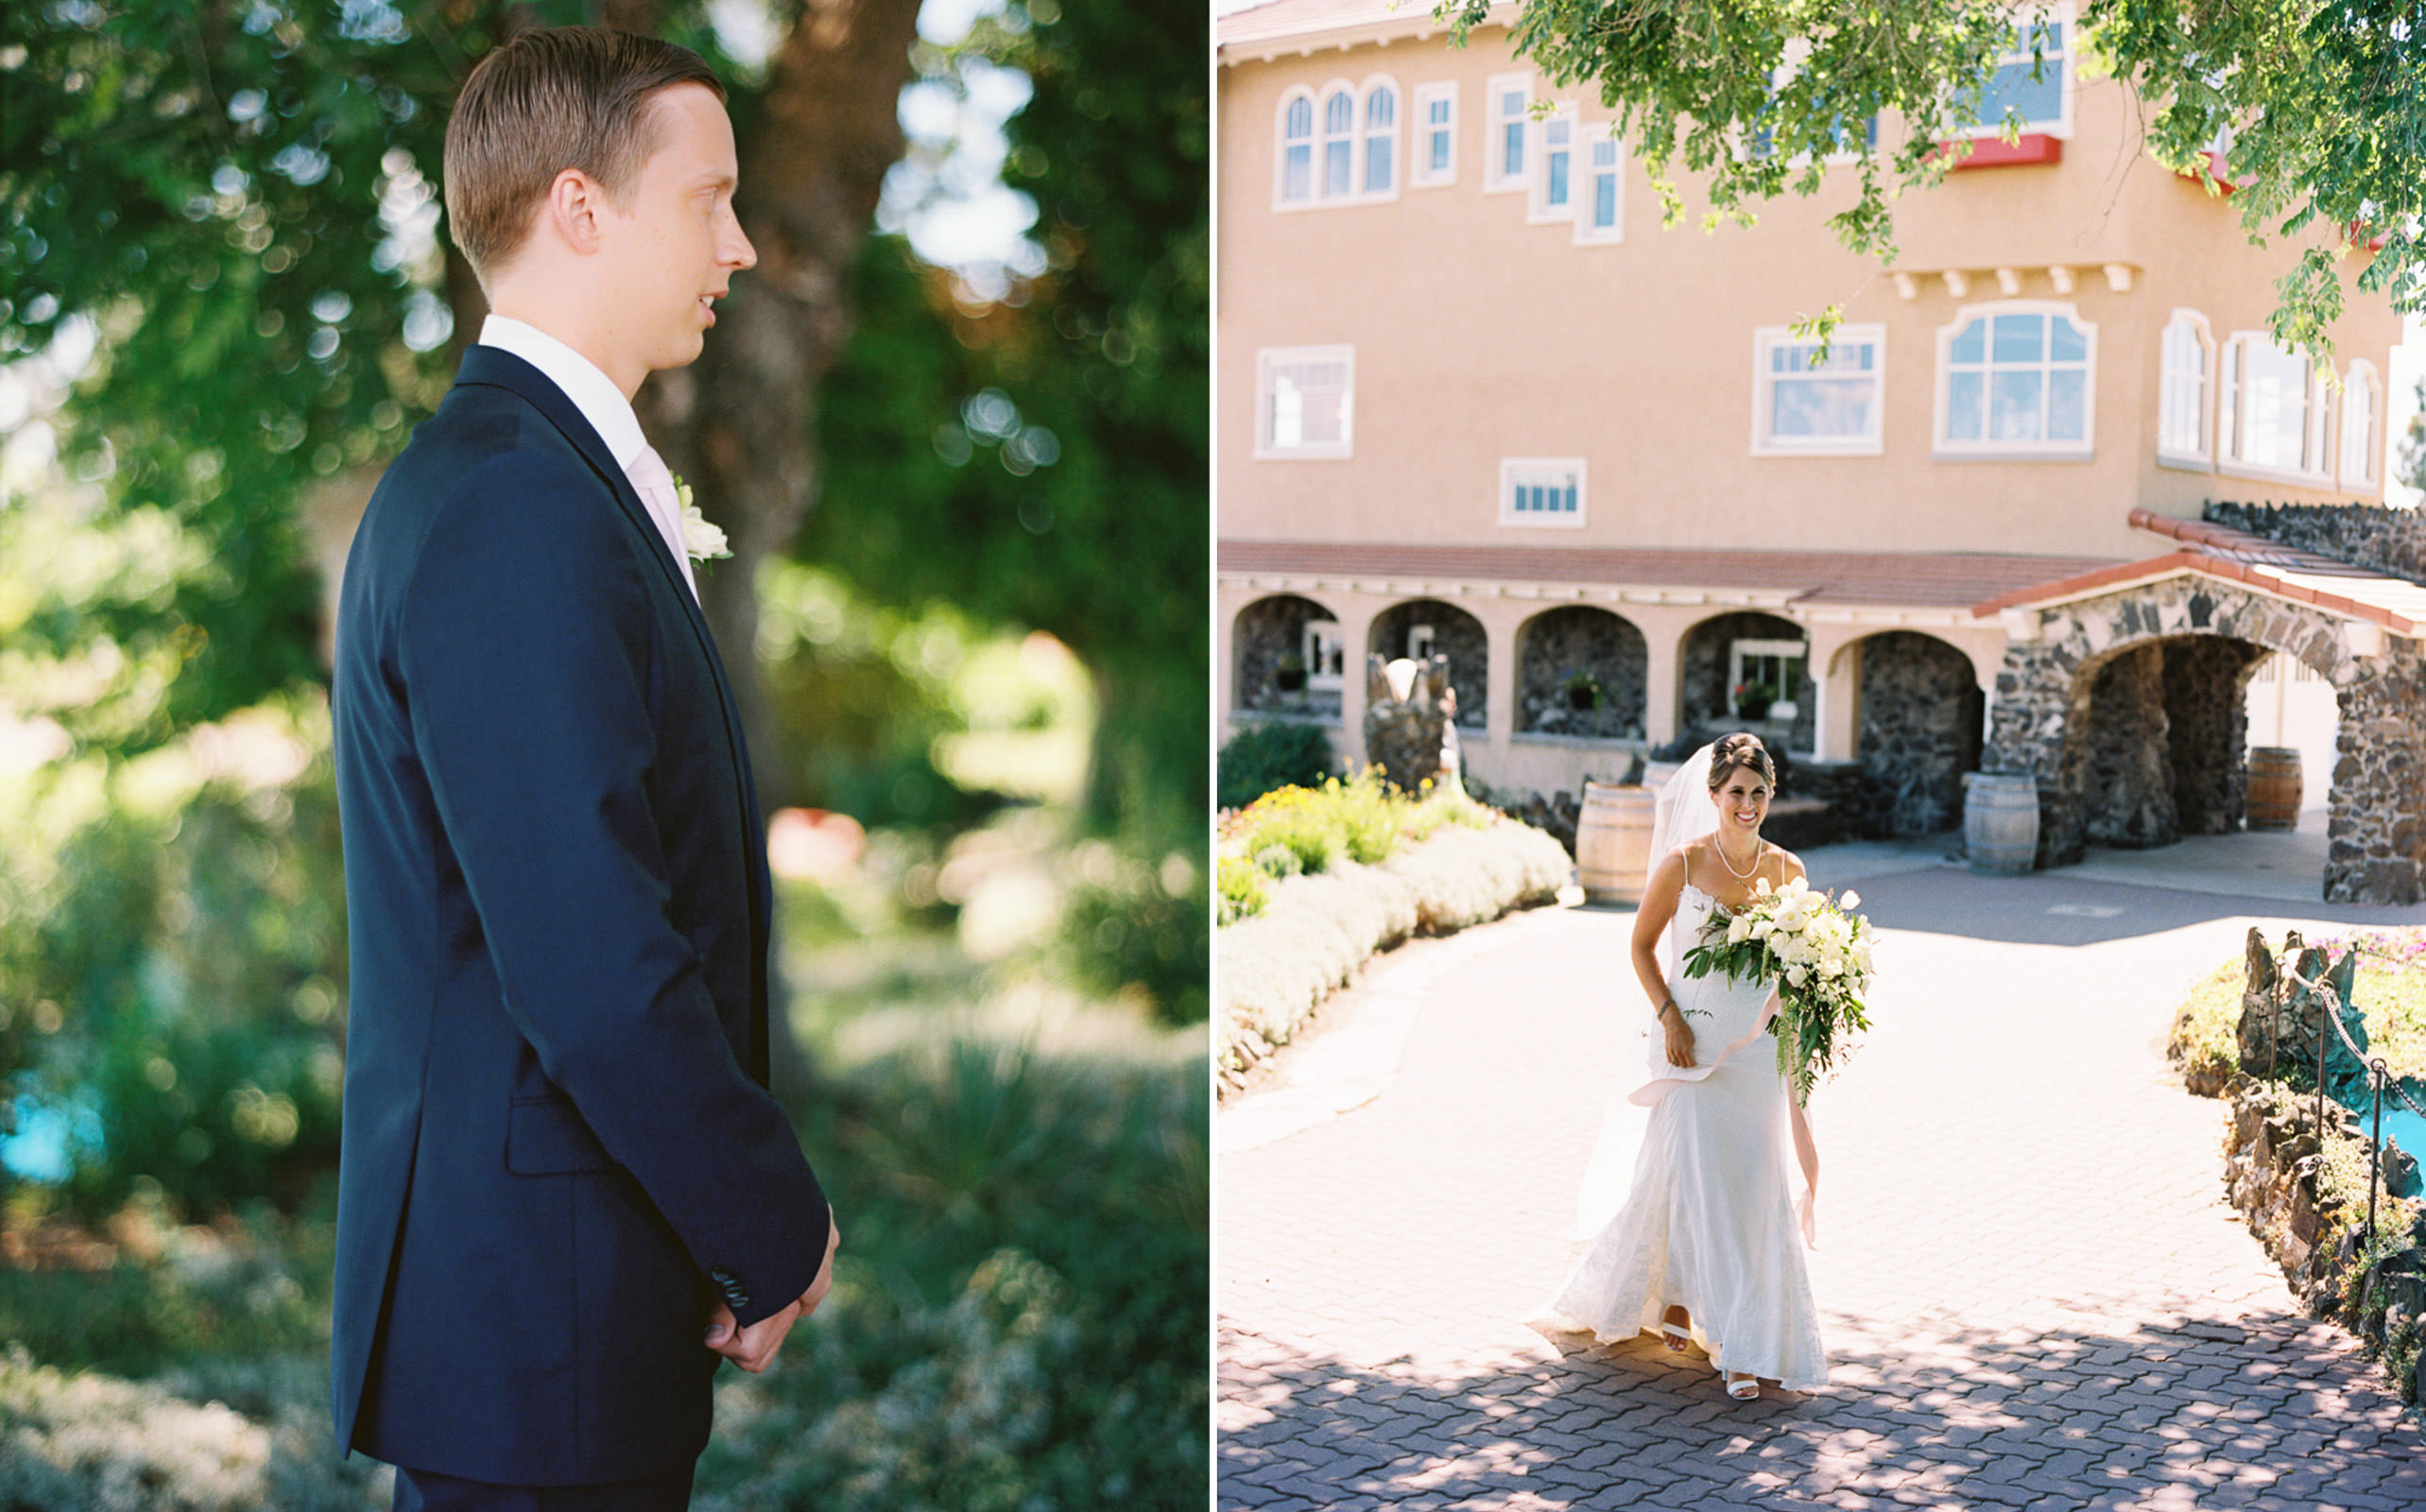 Romantic Arbor Crest Winery Wedding Photos by Spokane Wedding Photographer Anna Peters